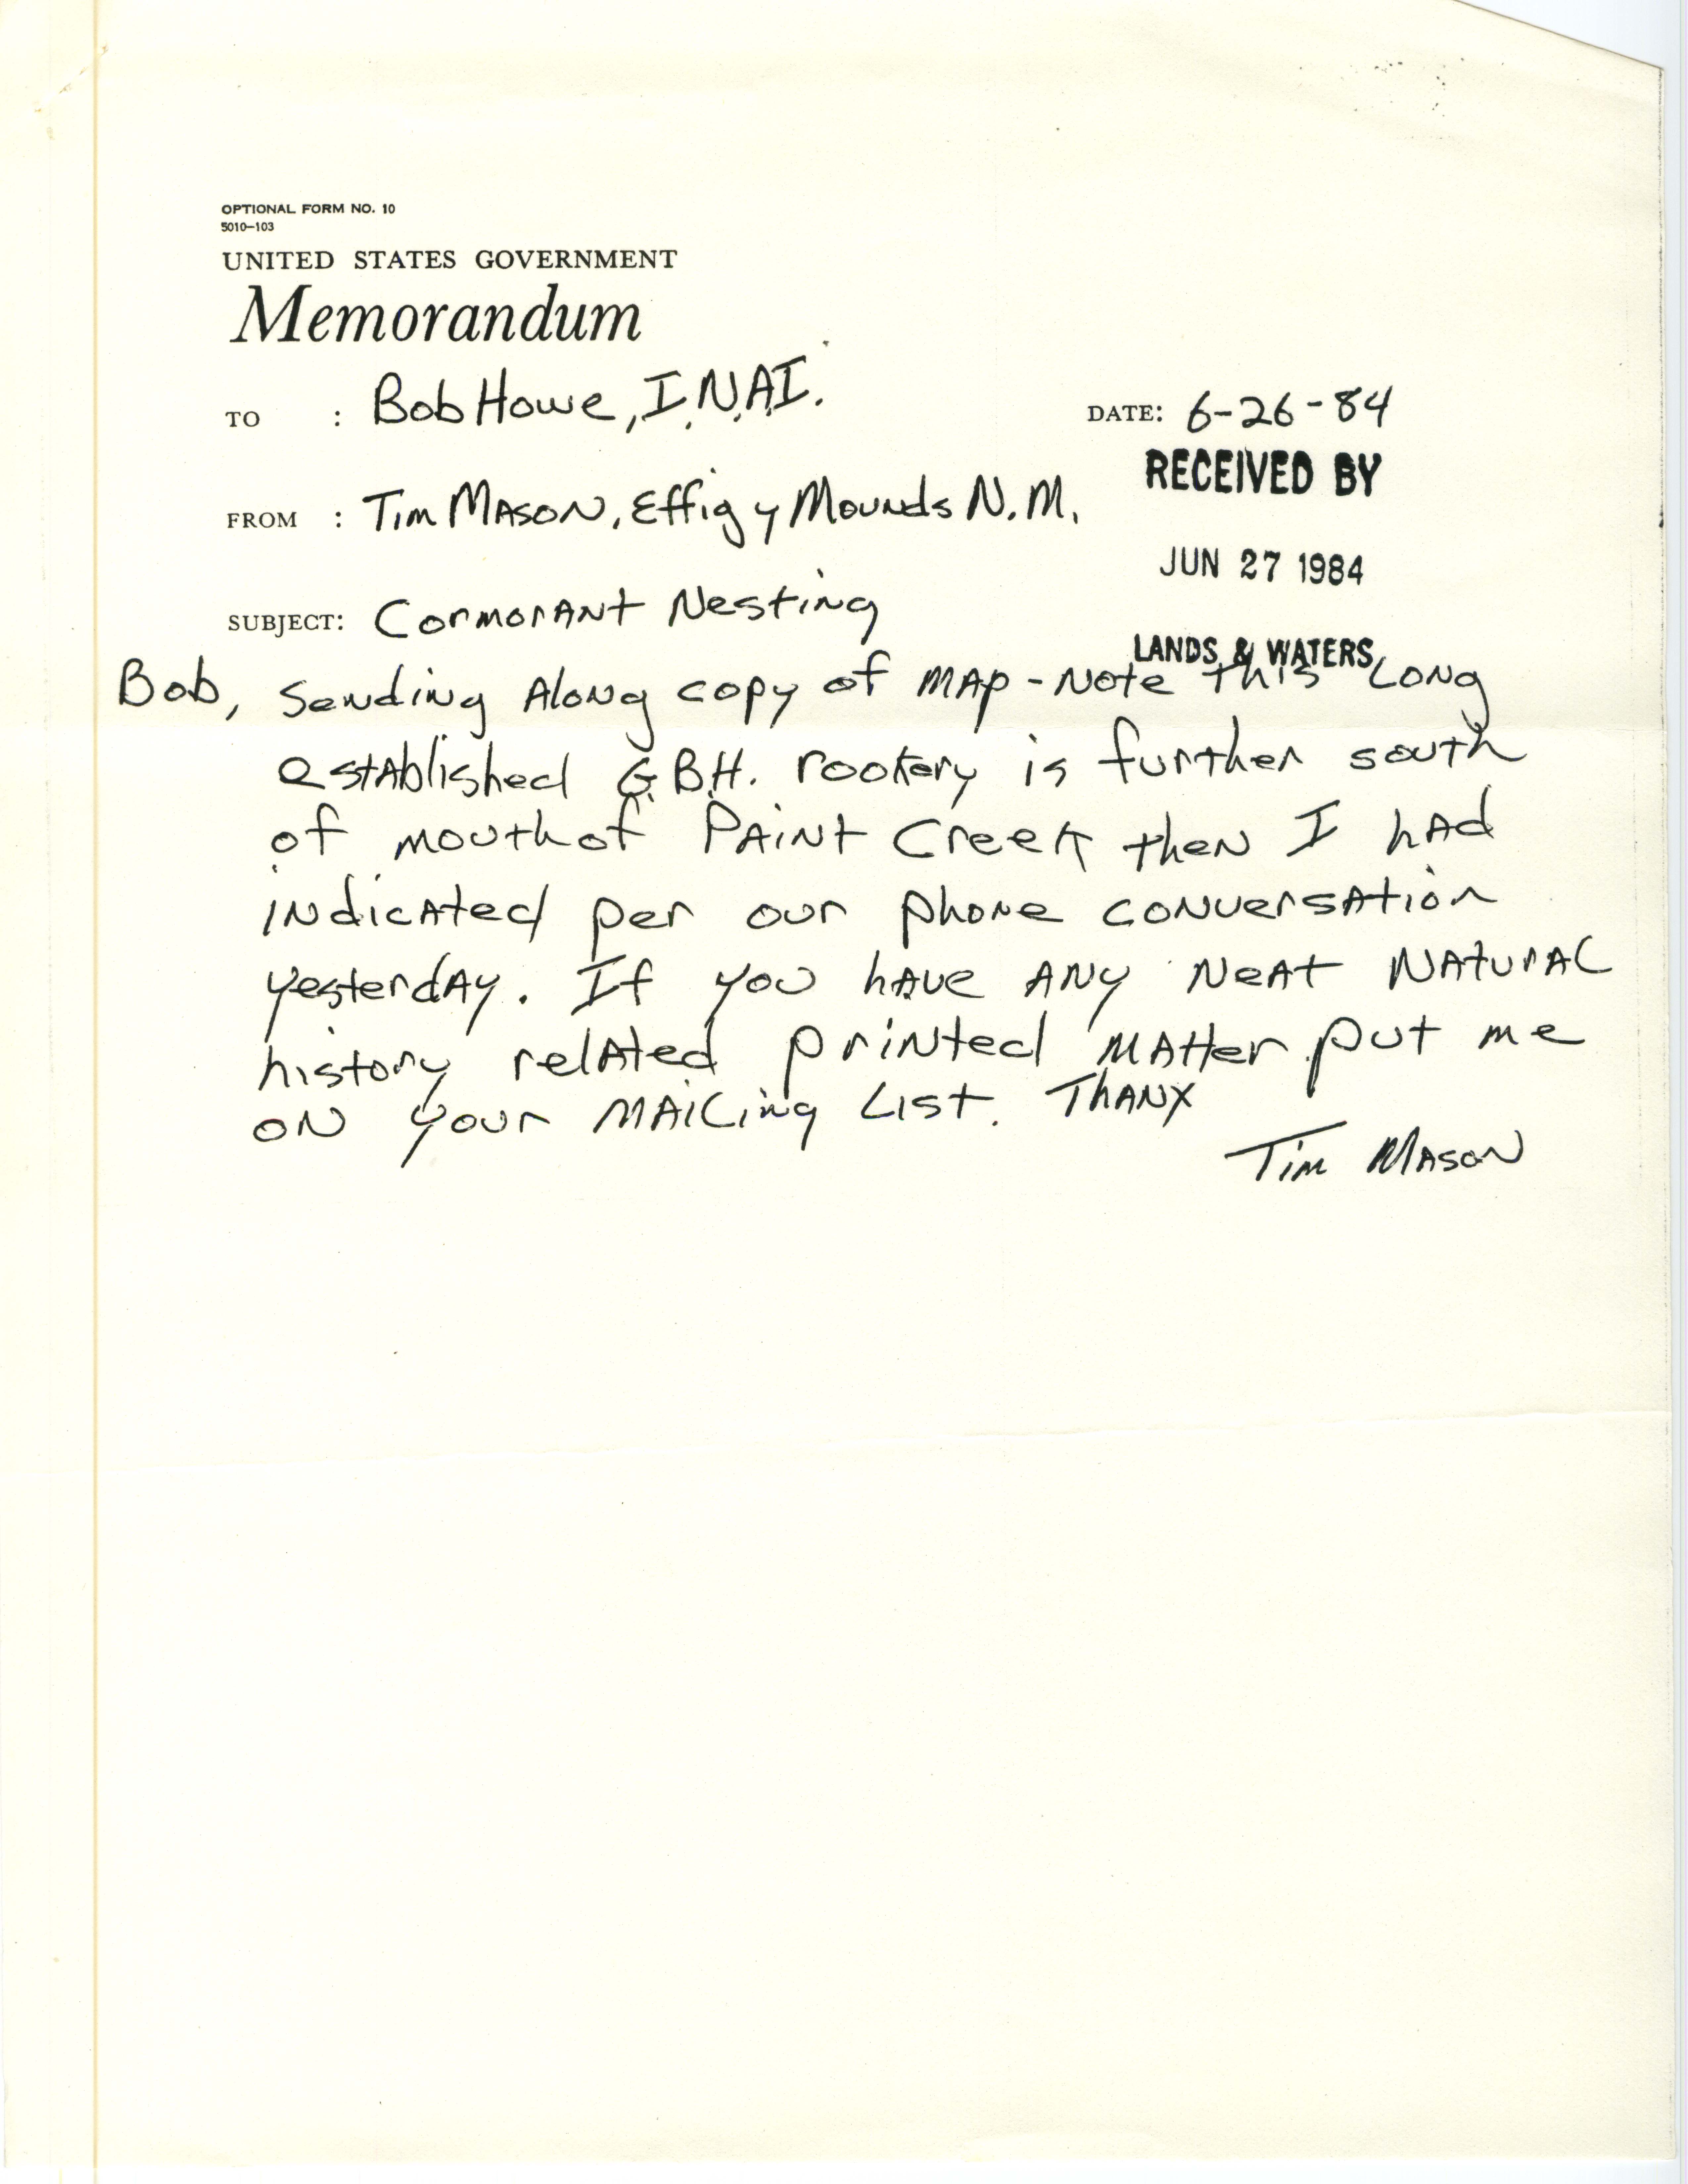 Tim Mason letter to Bob Howe regarding Double-crested Cormorant nesting, June 26, 1984